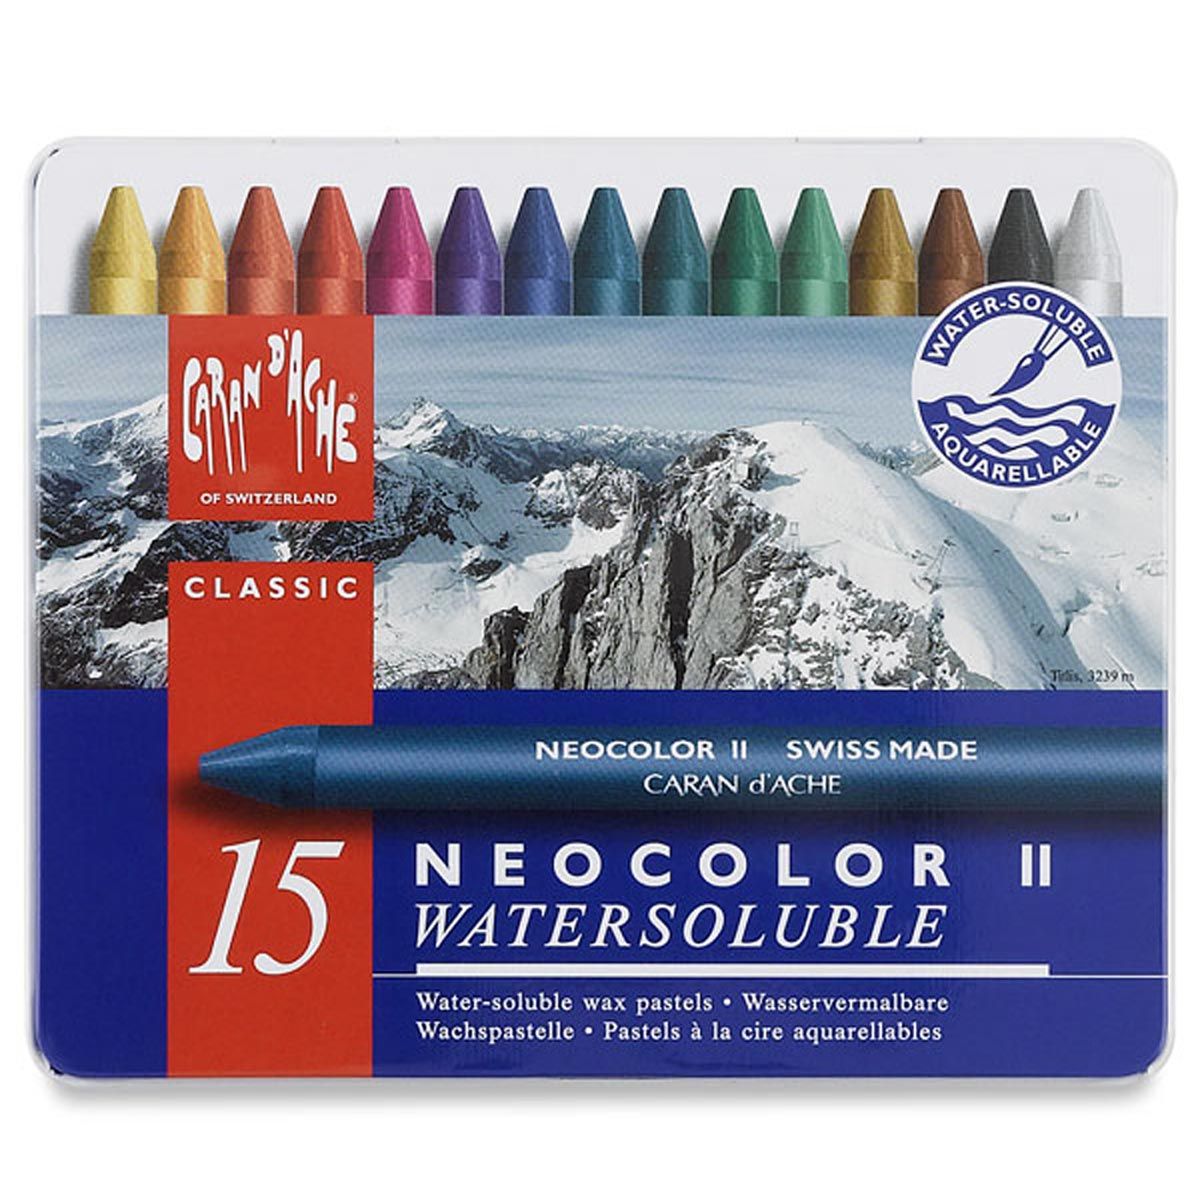 Caran d'Ache Neocolor II Water-Soluble Wax Pastel Set of 15